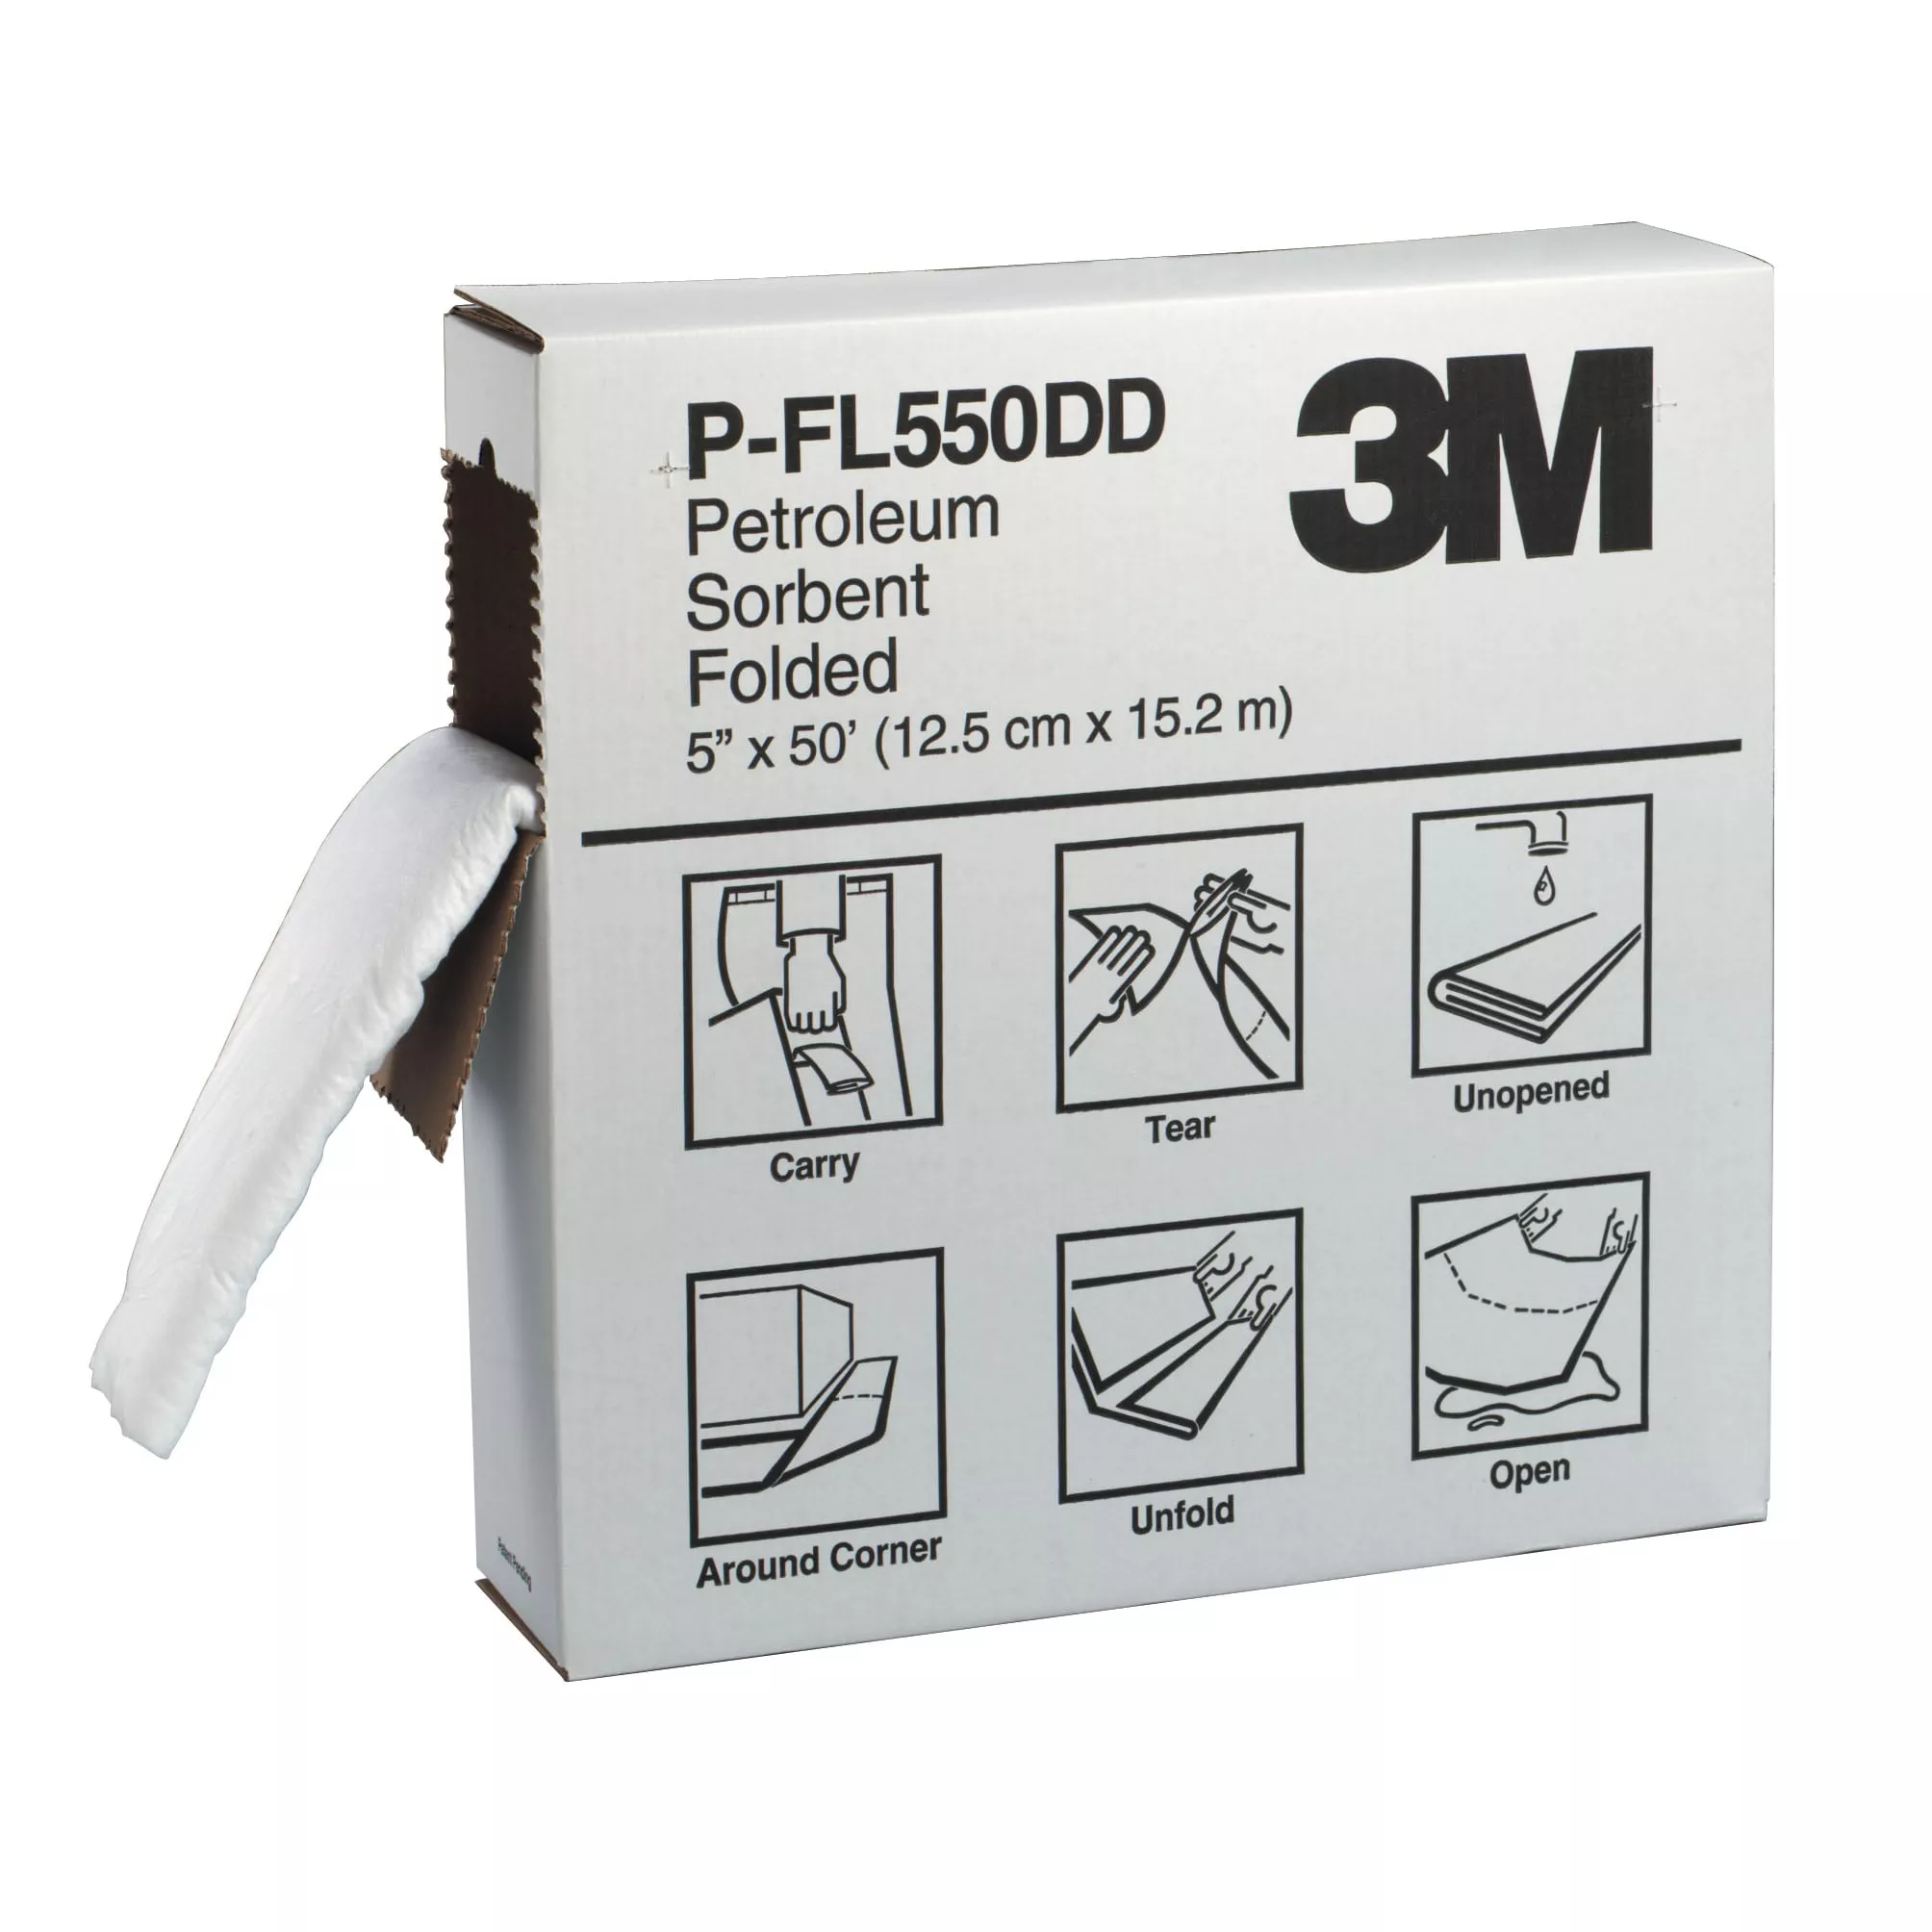 3M™ Oil Sorbent Folded P-FL550DD, 127 mm x 15.2 m, 3 Sets/Case